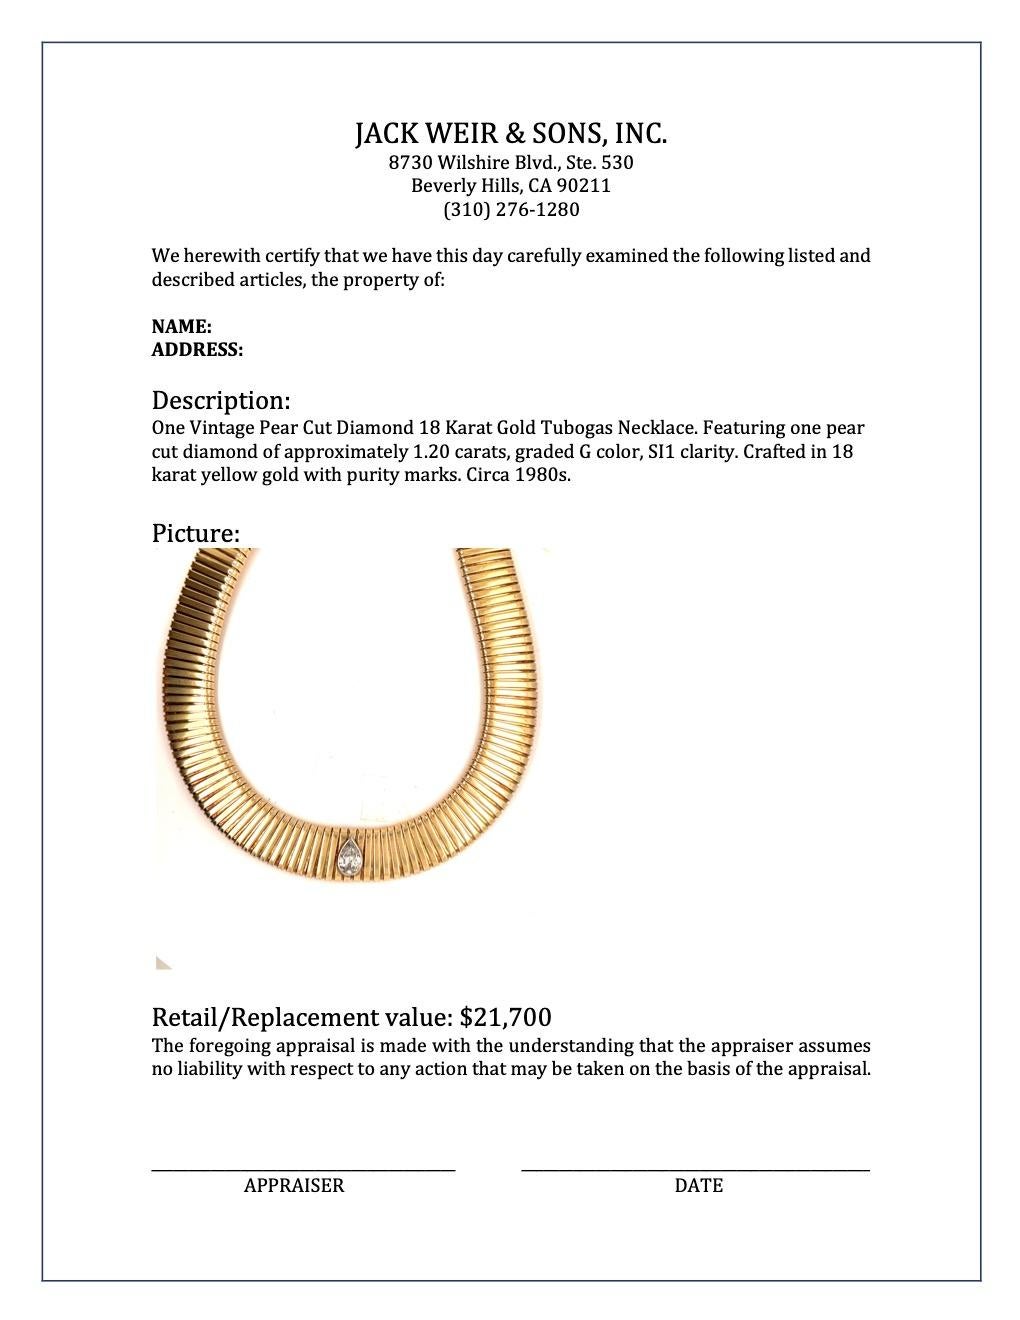 Vintage Pear Cut Diamond 18 Karat Gold Tubogas Necklace 1